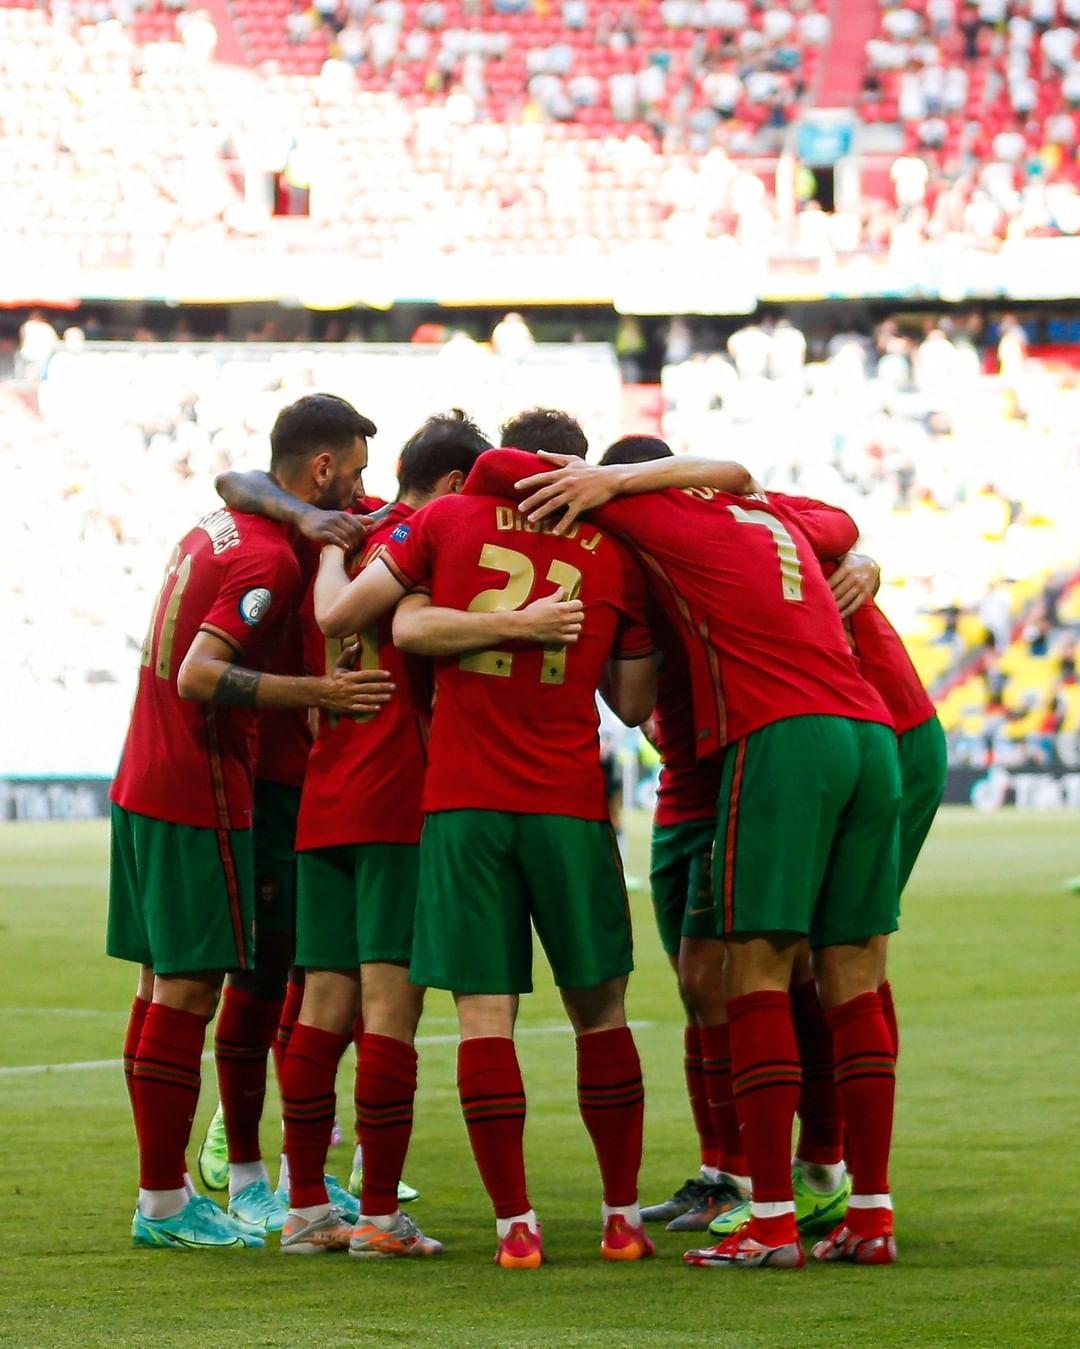 
 Chegou o dia! 👊 Vamos todos, #VamosComTudo! 

🇵🇹✖️🇹🇷
⌚ 19h45
📺 RTP1 

It's today! 👊 Let's get it done, together! #TeamPortugal 
 